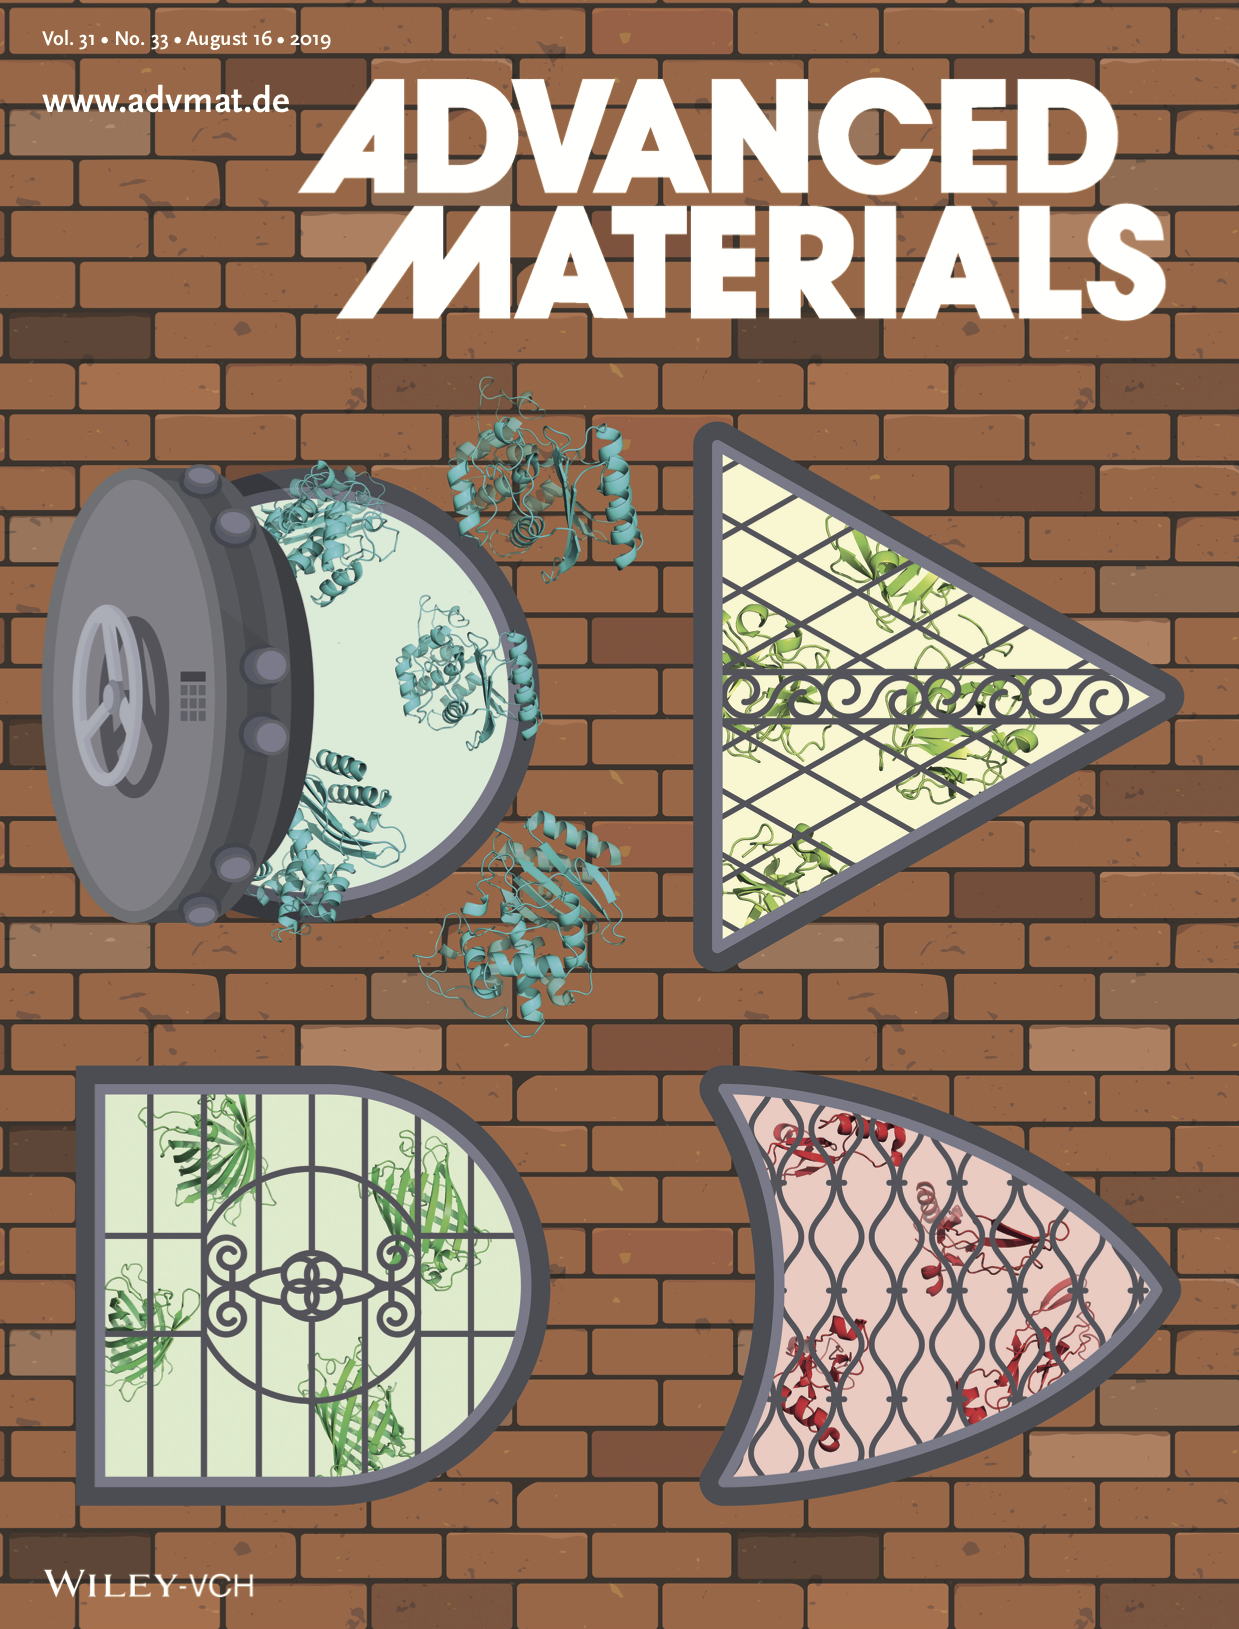 Gawade 2019 Advanced Materials Cover